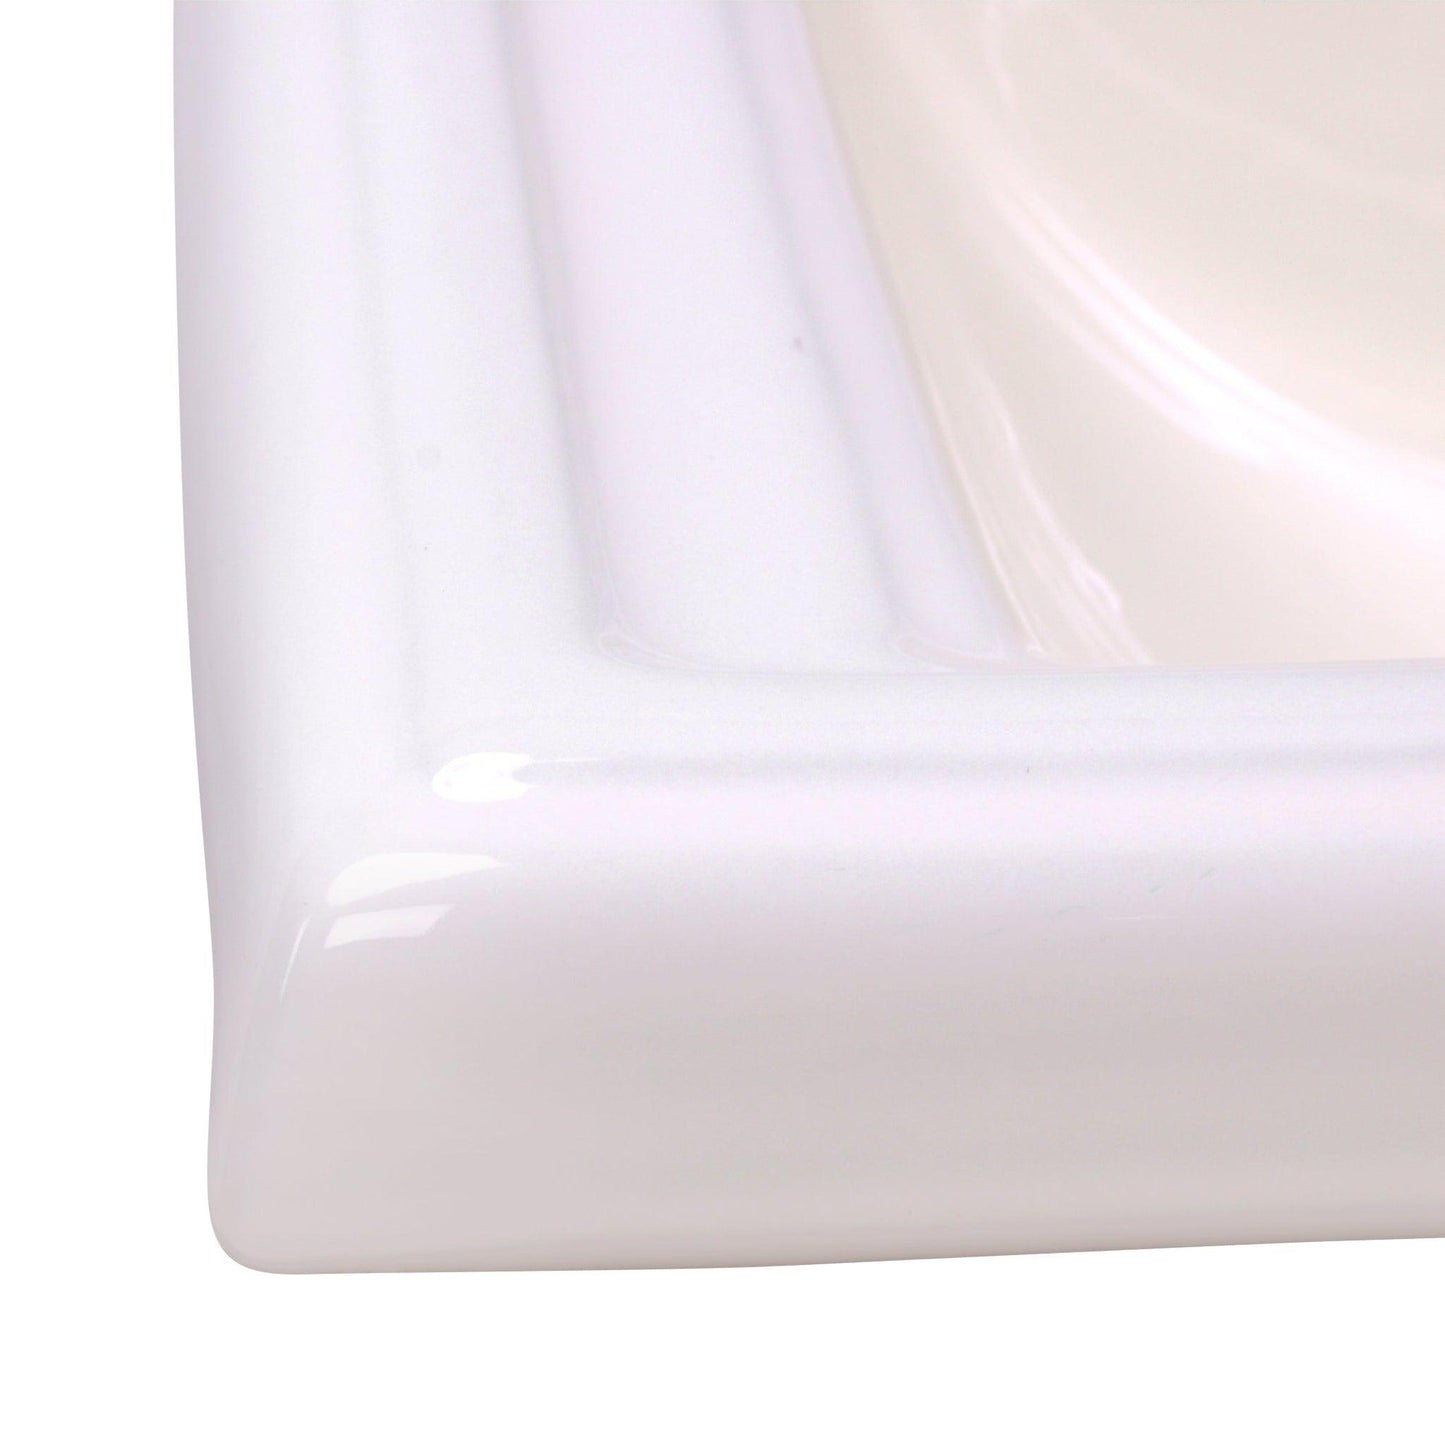 Nantucket Sinks Great Point 23" 3-Hole 8" Centerset Rectangular Drop-In Porcelain Enamel Glazed Bisque Ceramic Vanity Sink